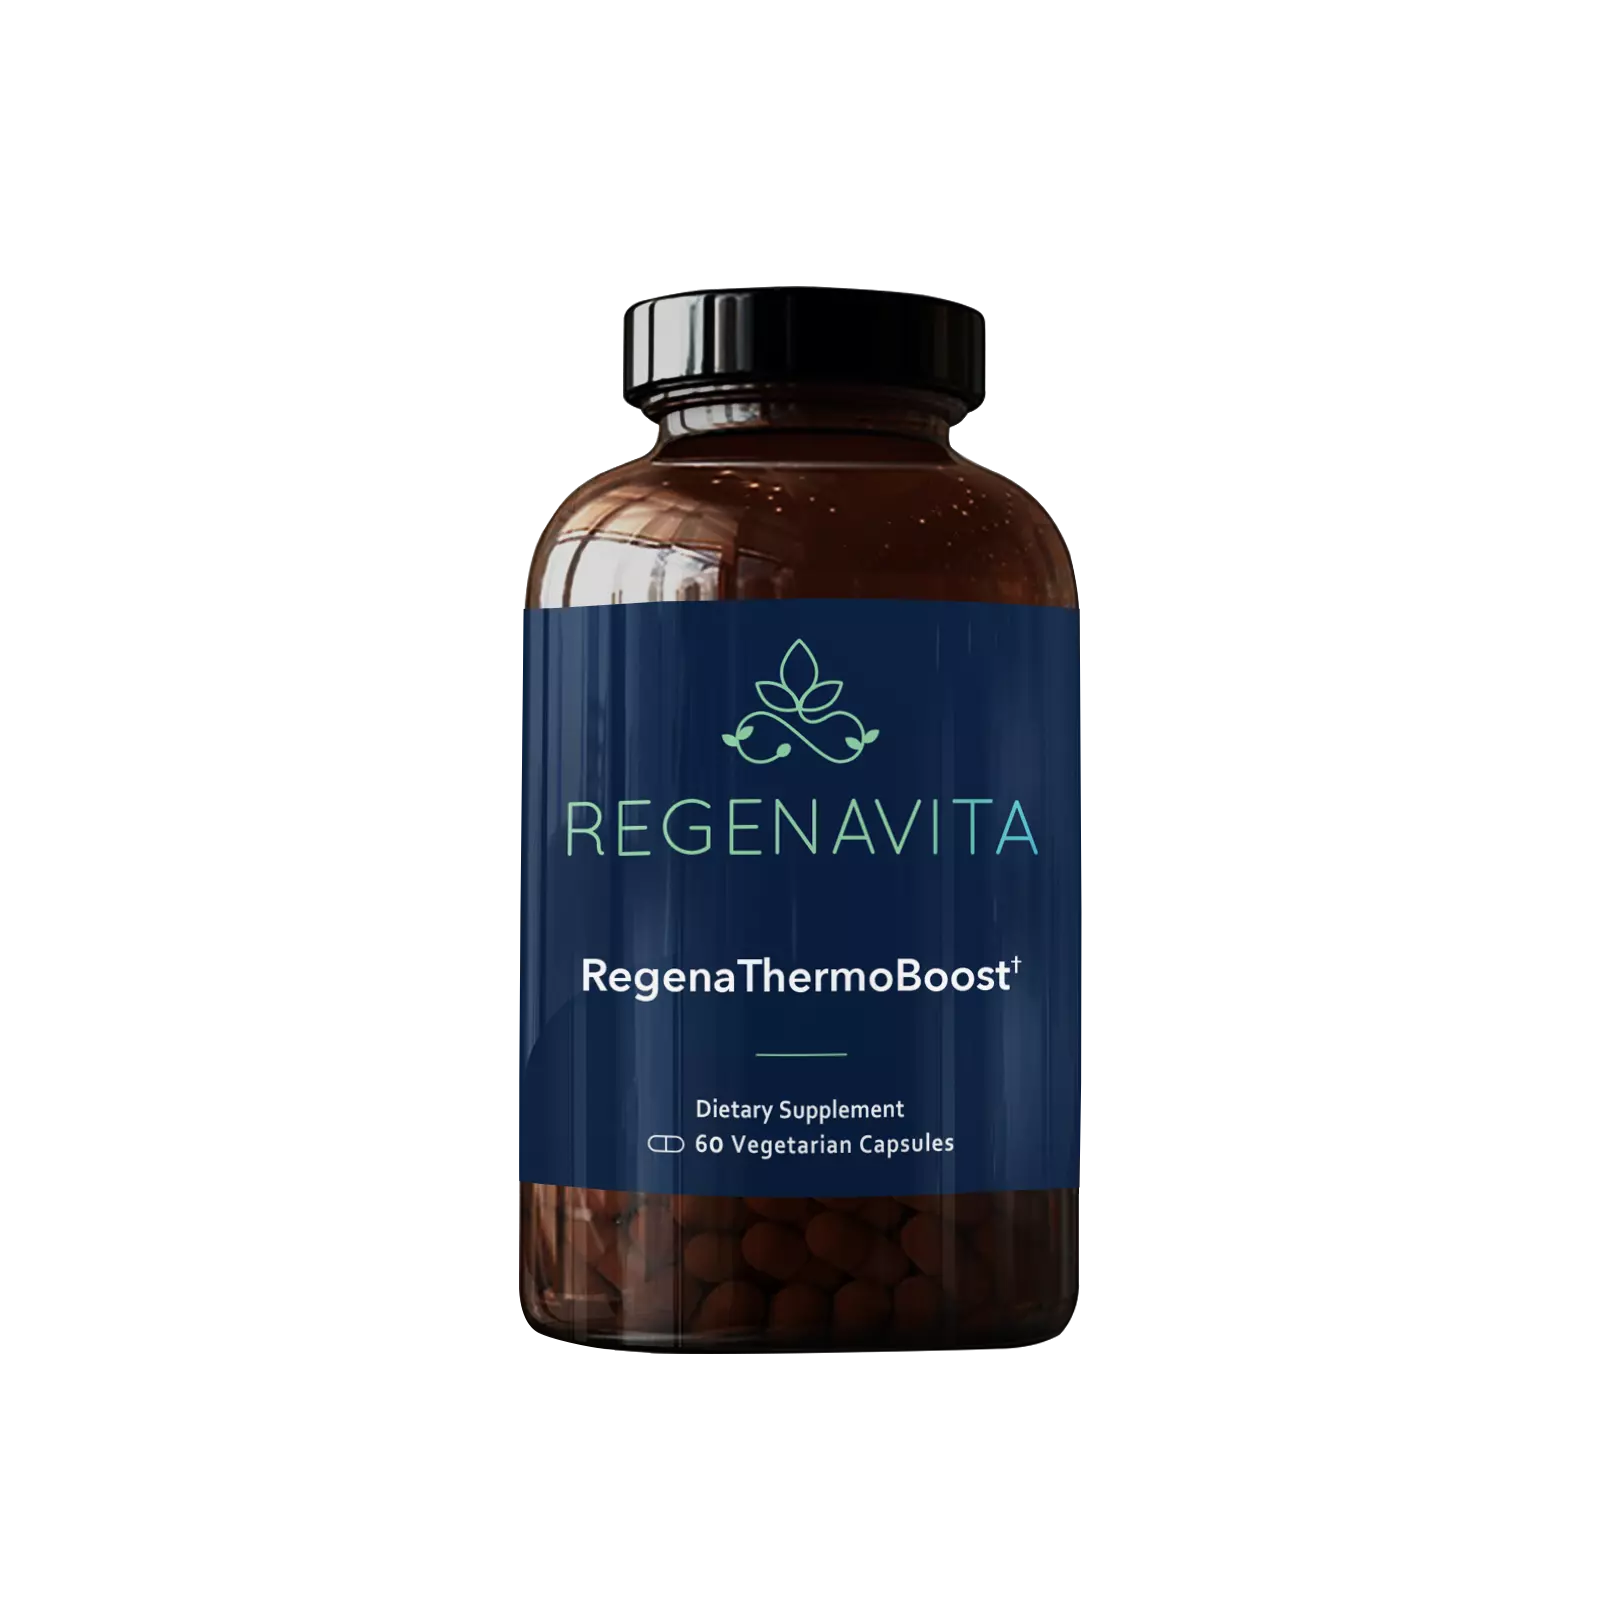 bottle of RegenaThermoBoost